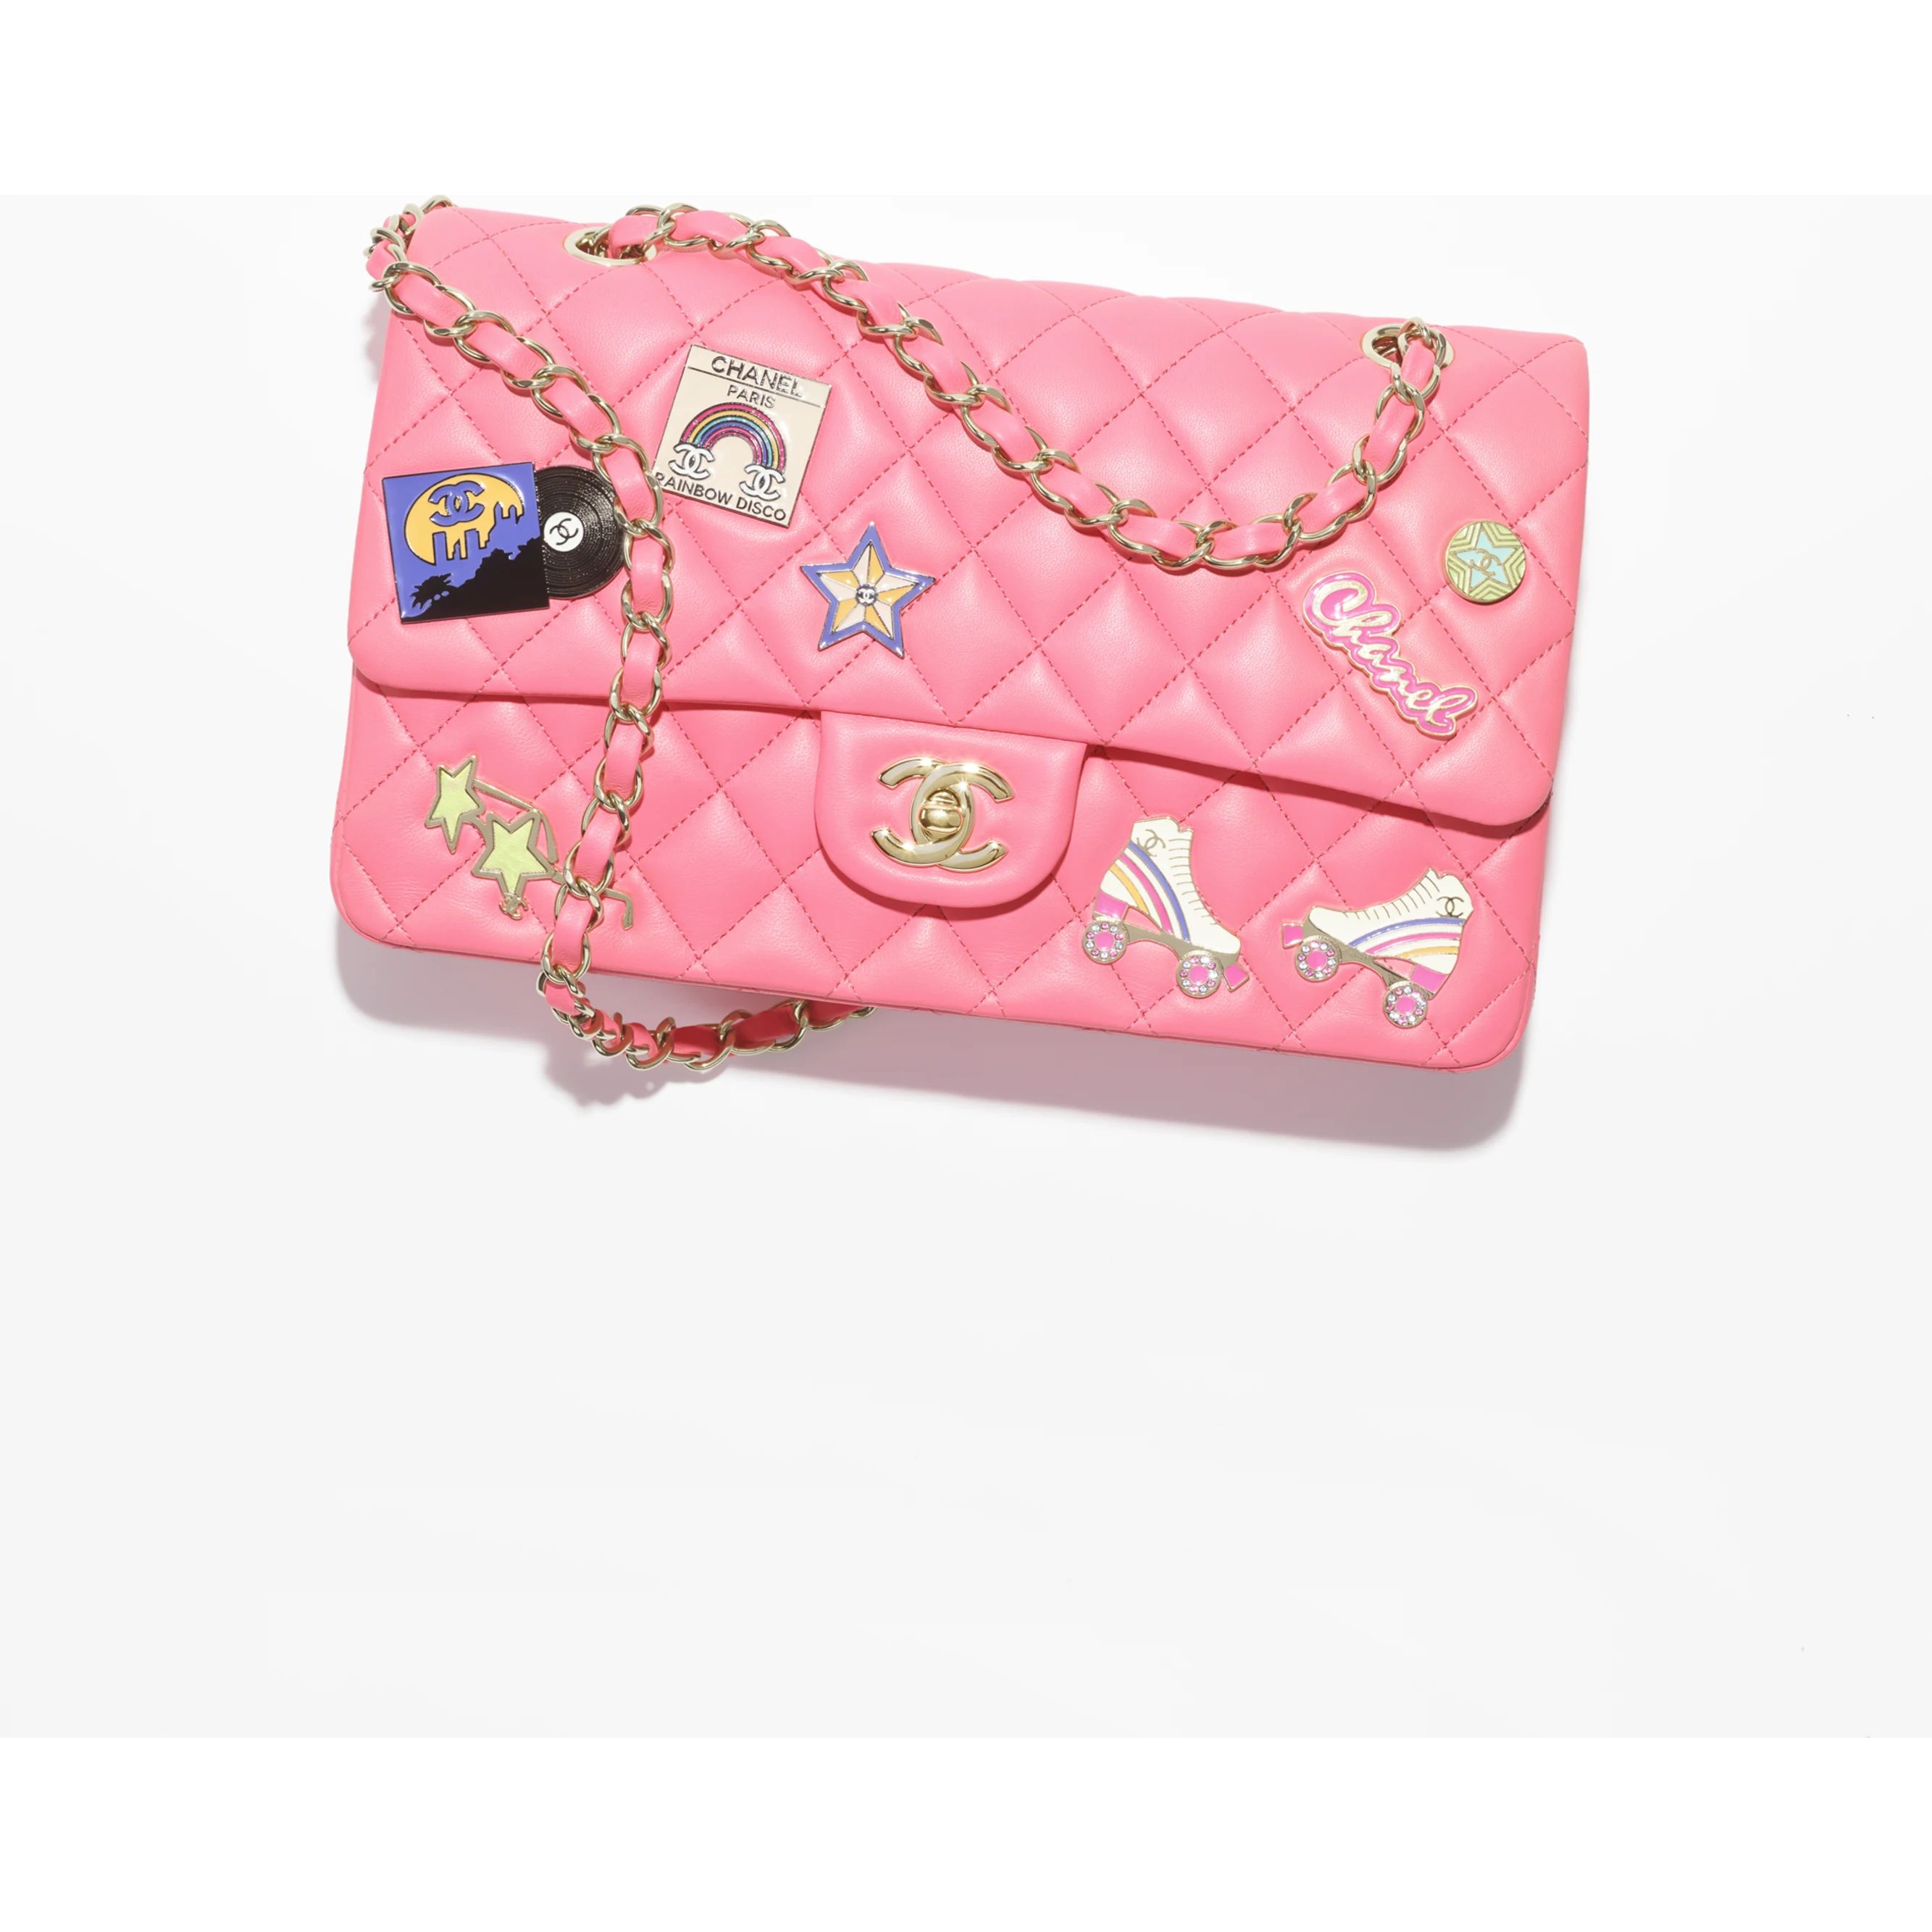 Classic handbag, Lambskin, enamel & gold-tone metal, coral pink — Fashion | CHANEL | Chanel, Inc. (US)